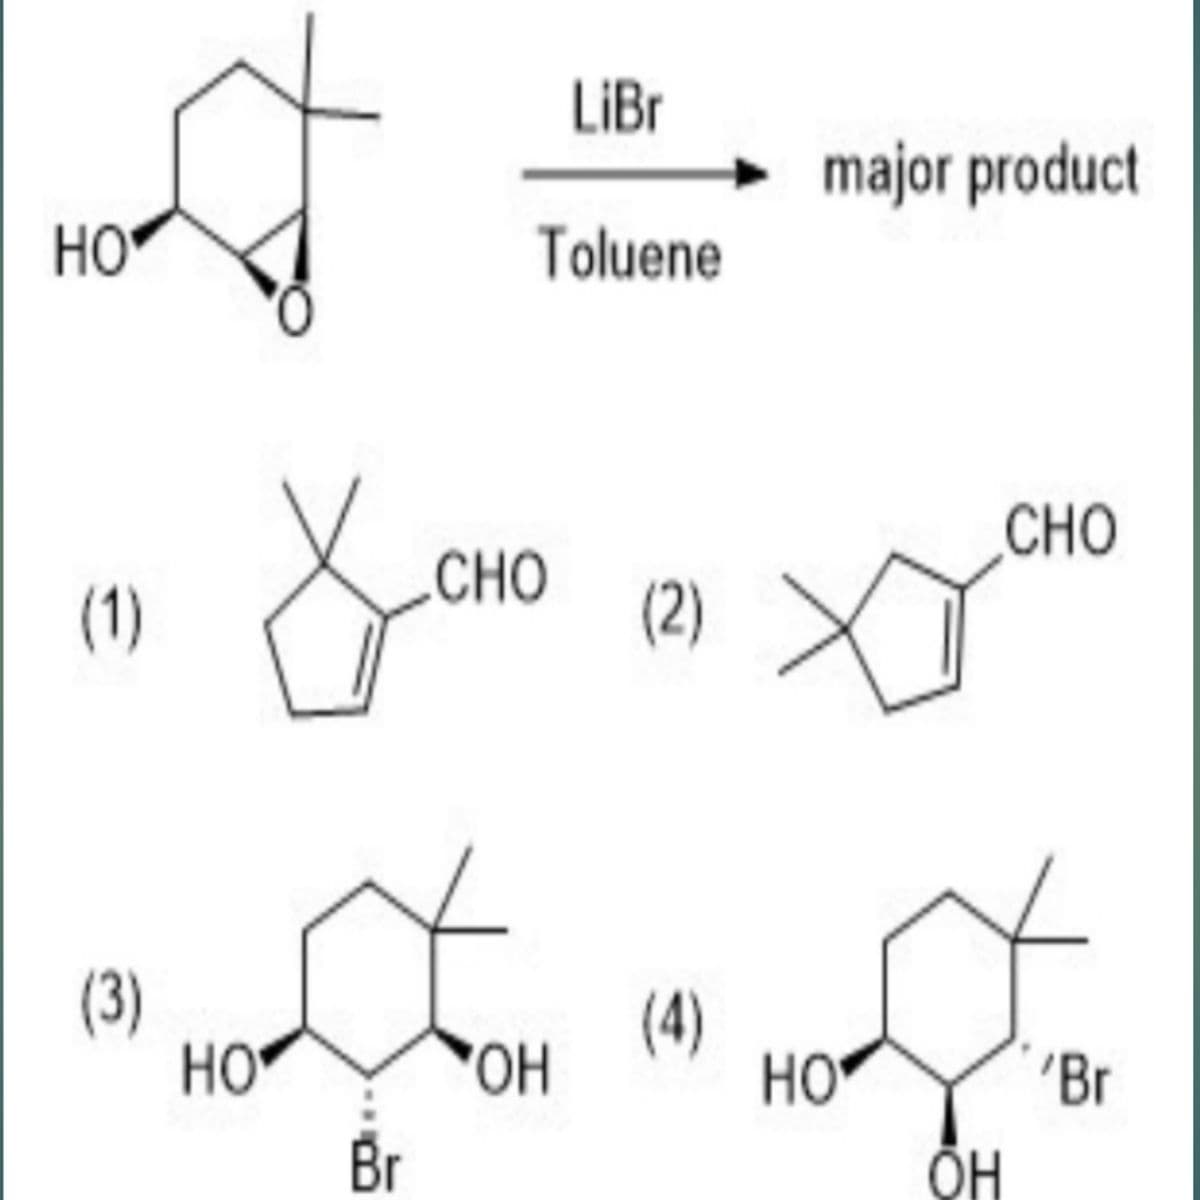 LiBr
major product
HO
Toluene
CHO
(1)
.CHO
(2)
(3)
HO
(4)
HO.
HO
'Br
Br
ÕH
